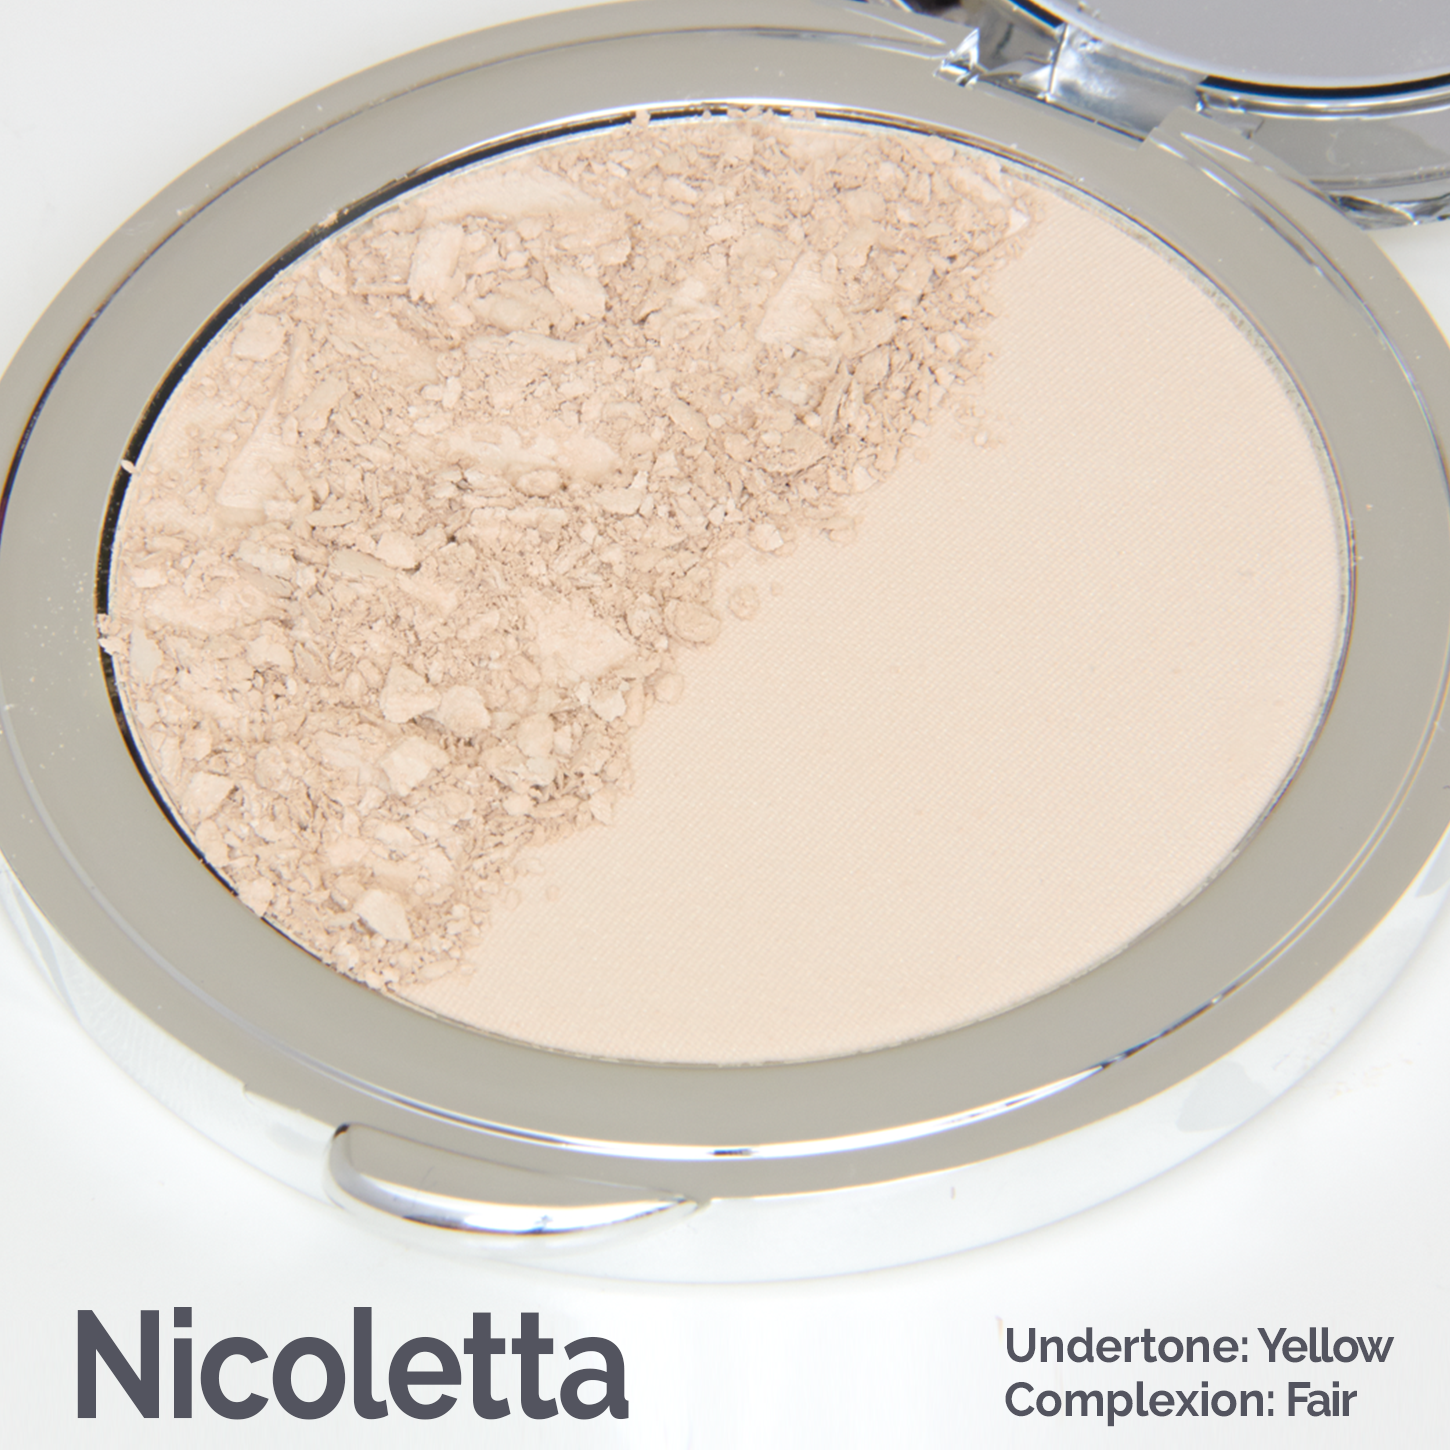 Nicoletta Color Swatch #nicoletta